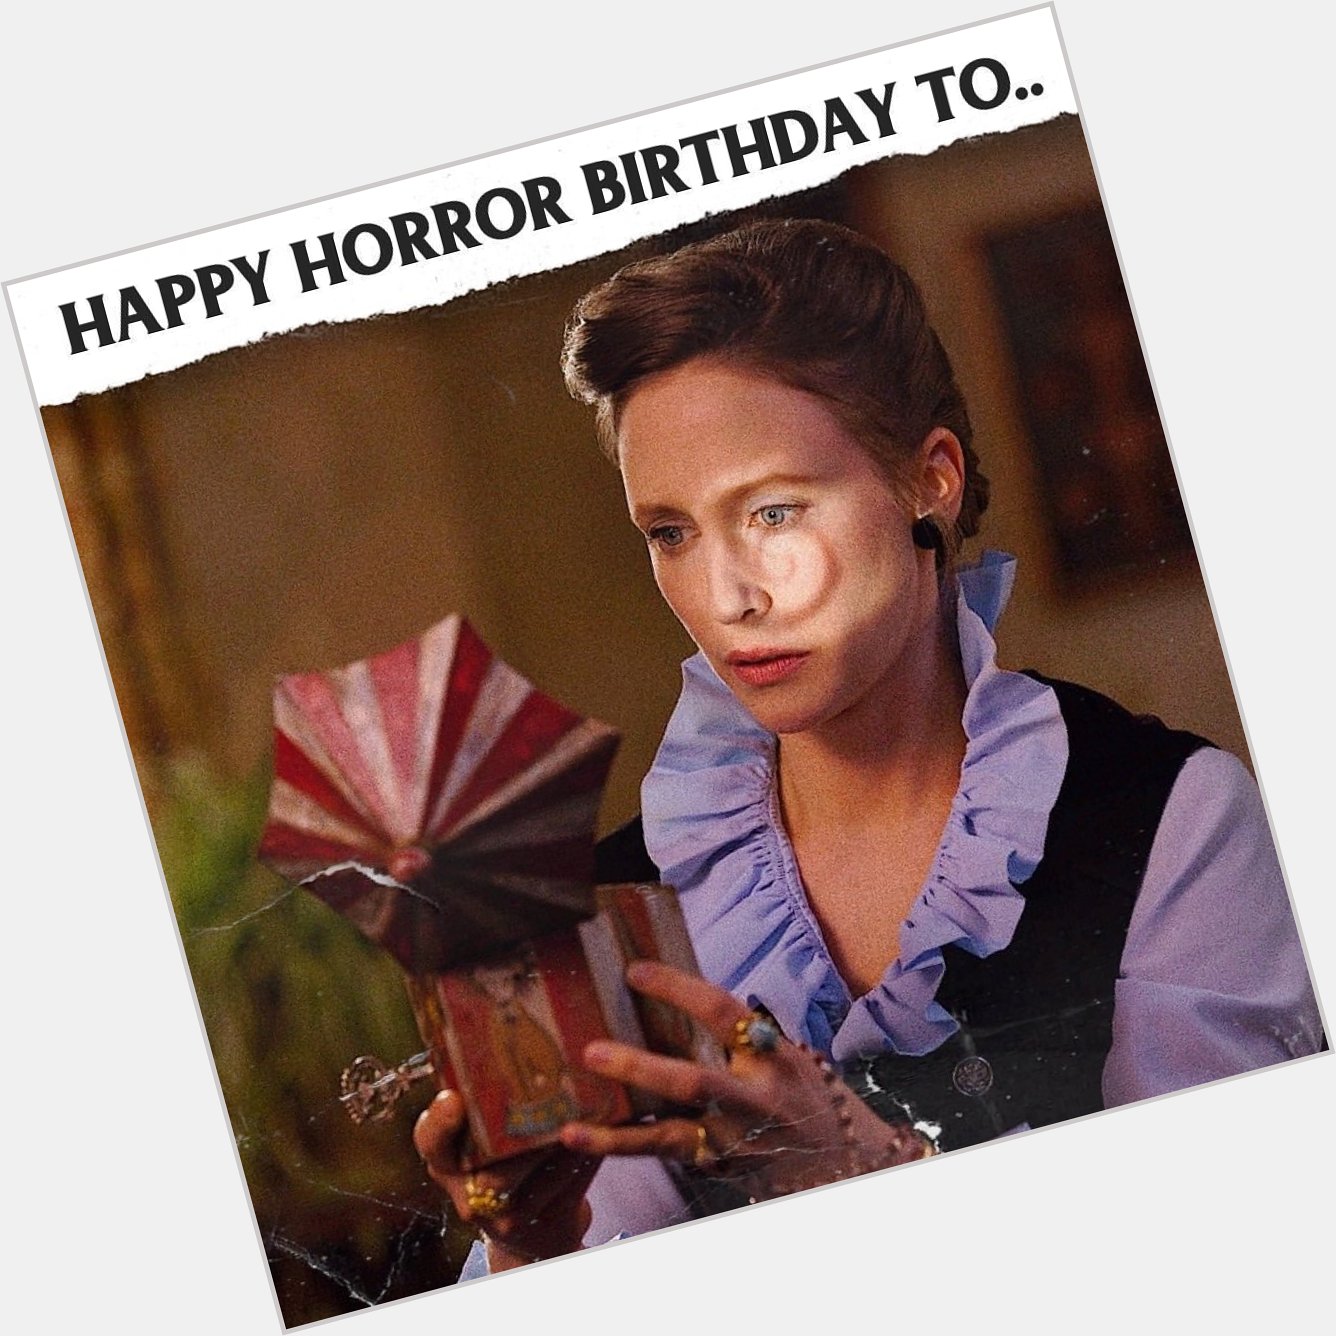 Happy Horror Birthday to VERA FARMIGA, born in 1973! 